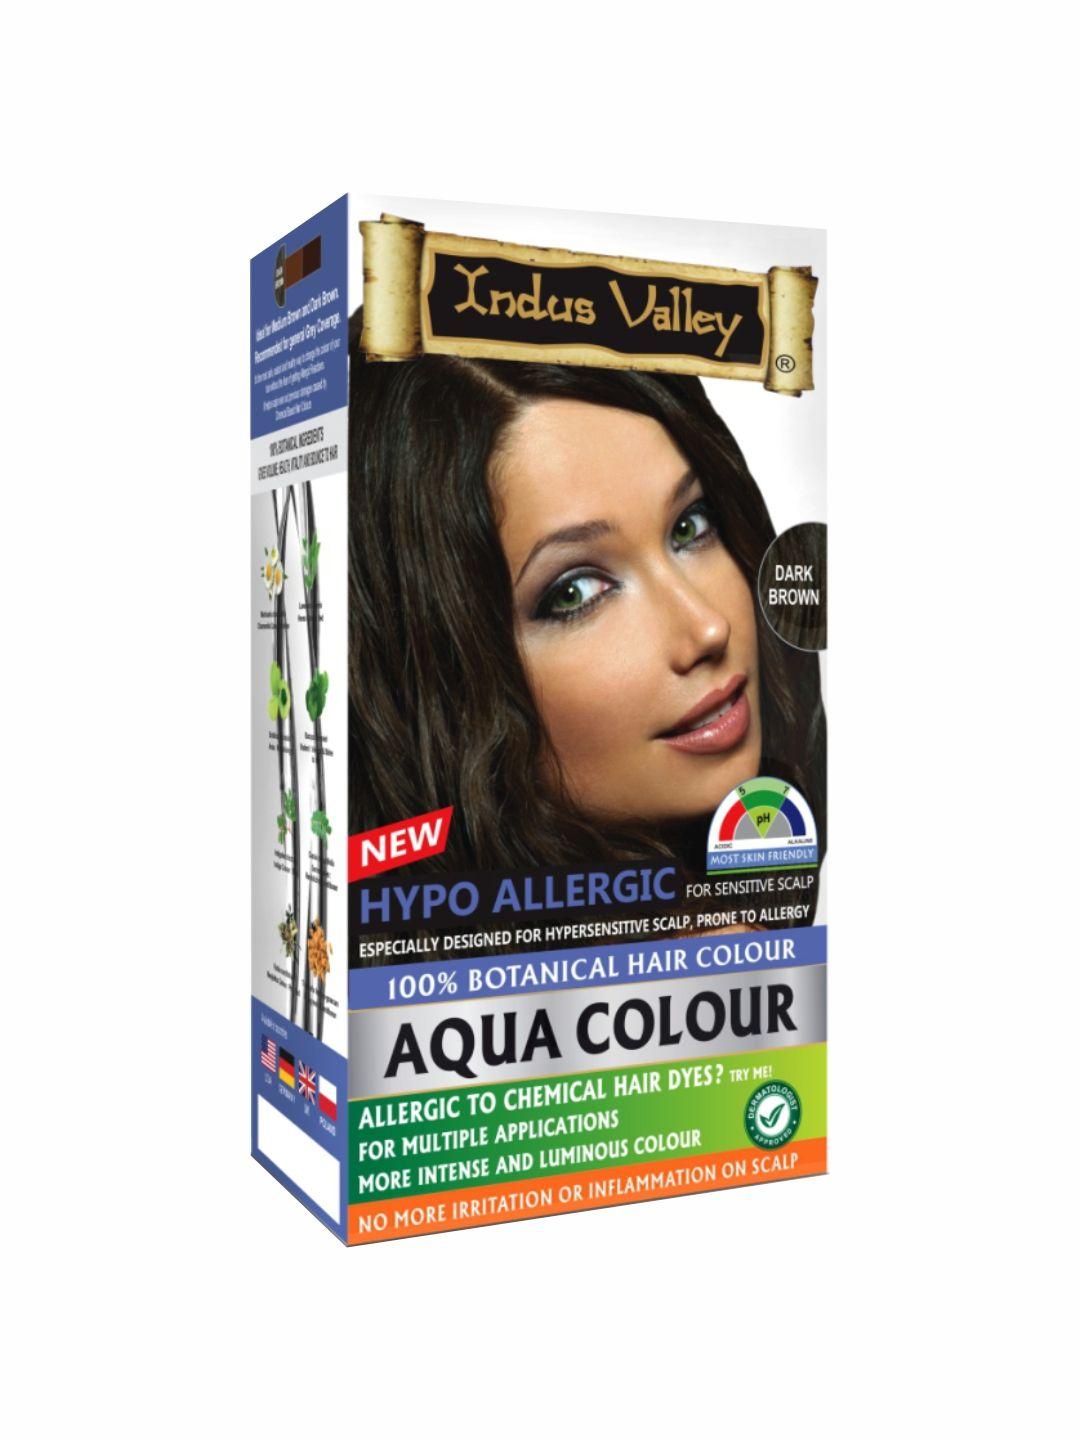 indus valley hypo allergic botanical aqua hair colour - dark brown